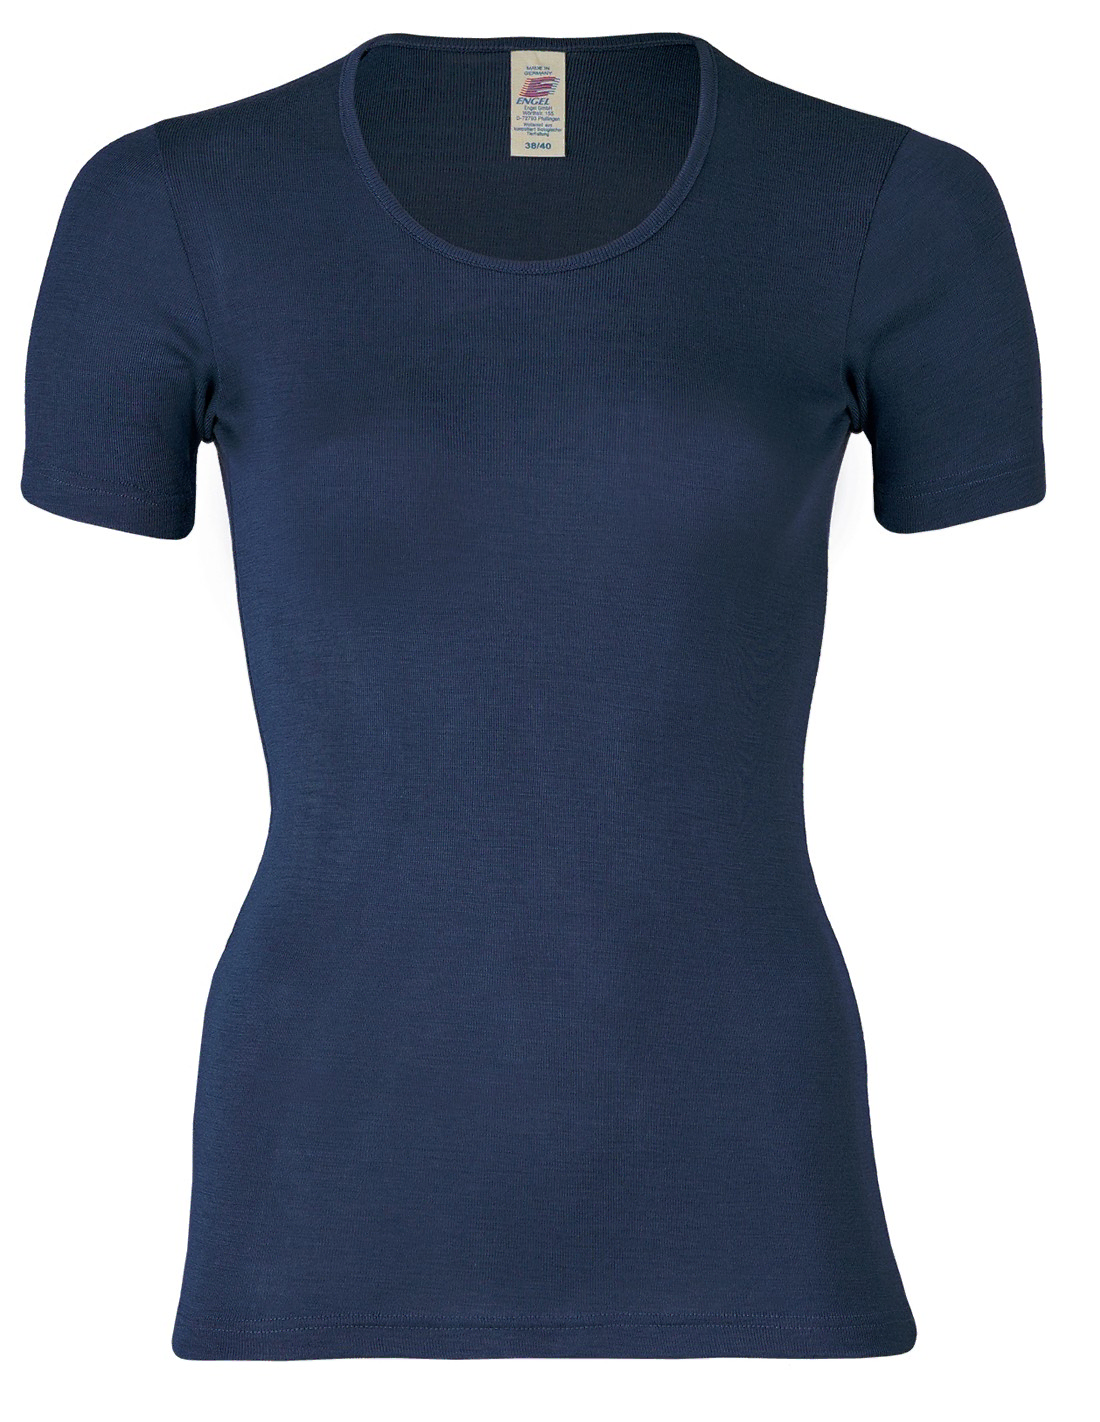 Image of Dames T-Shirt Zijde Wol Engel Natur, Kleur Navy blauw, Maat 42/44 - Large